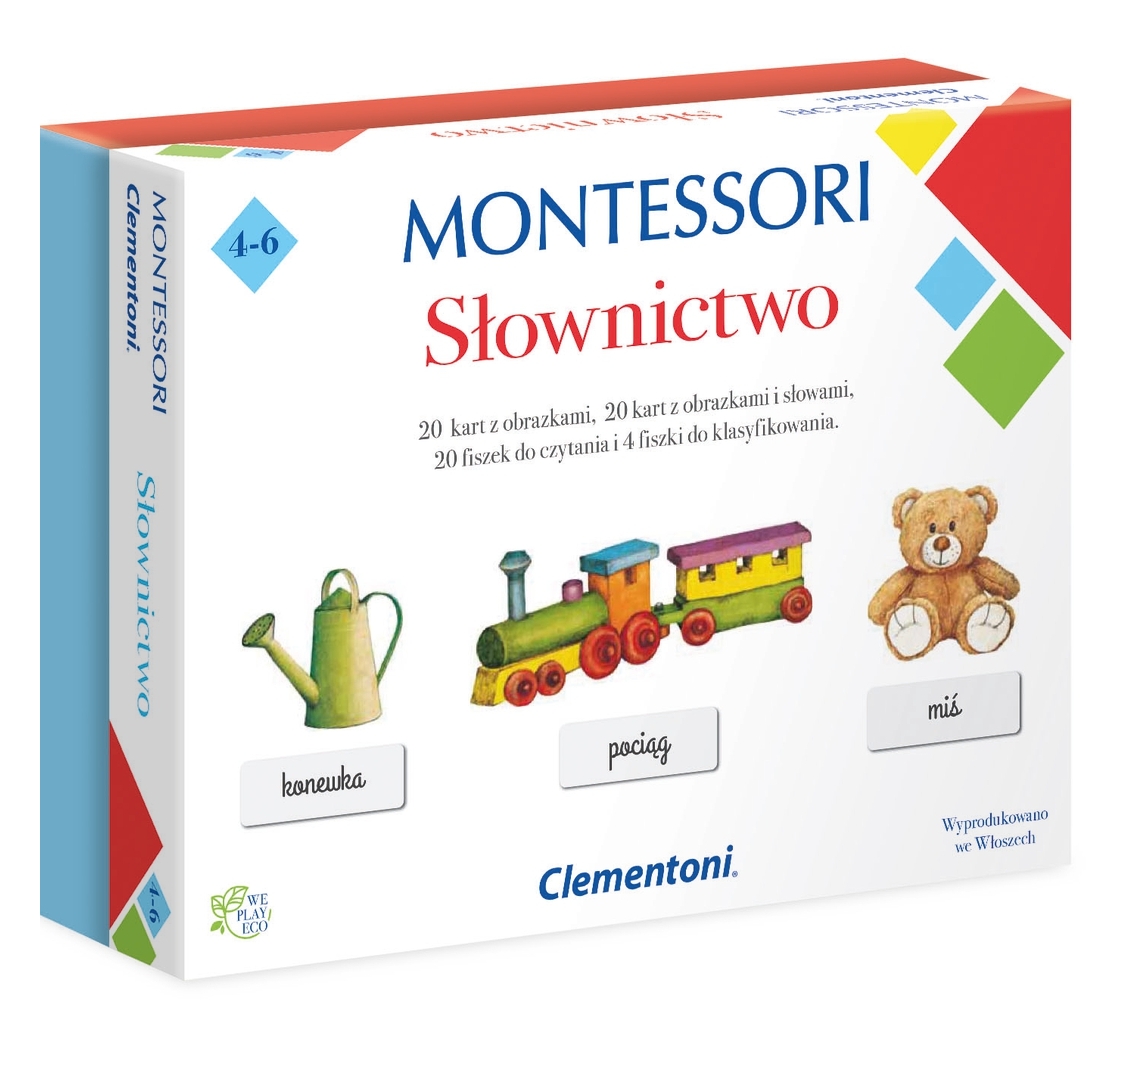 Montessori: Słownictwo (50077)